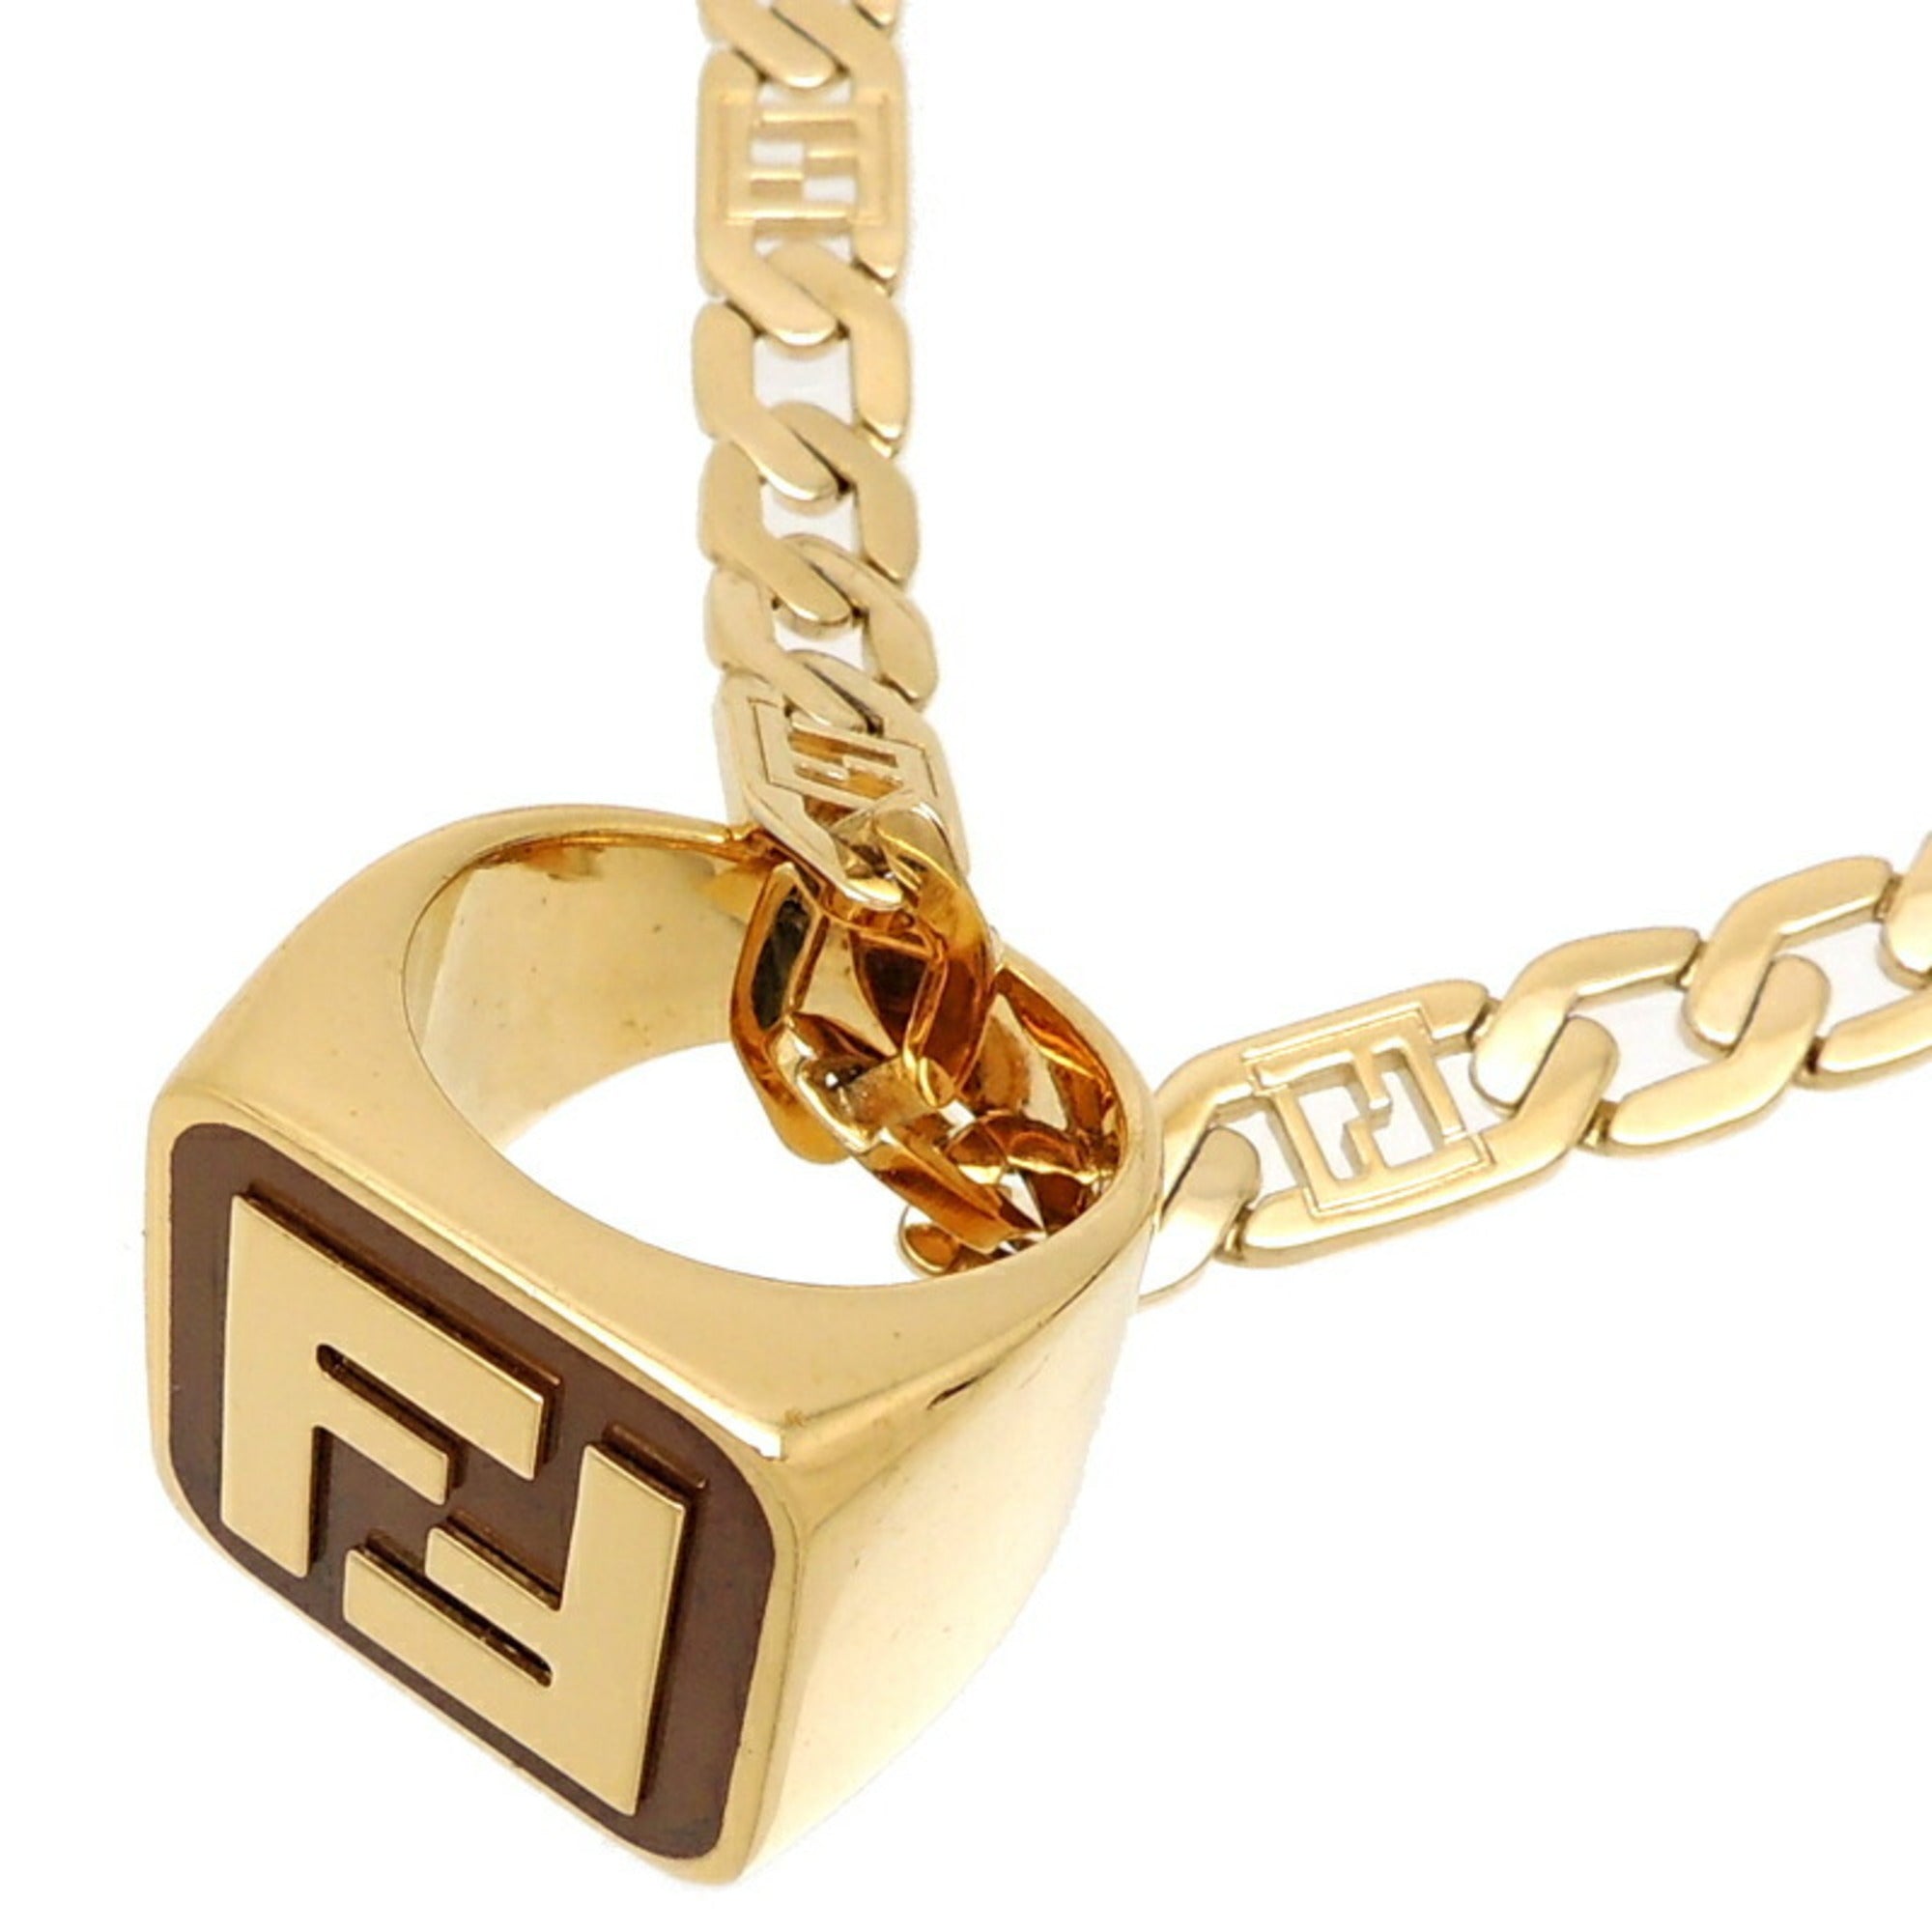 Silver Necklace with logo charm Balenciaga - GenesinlifeShops Germany